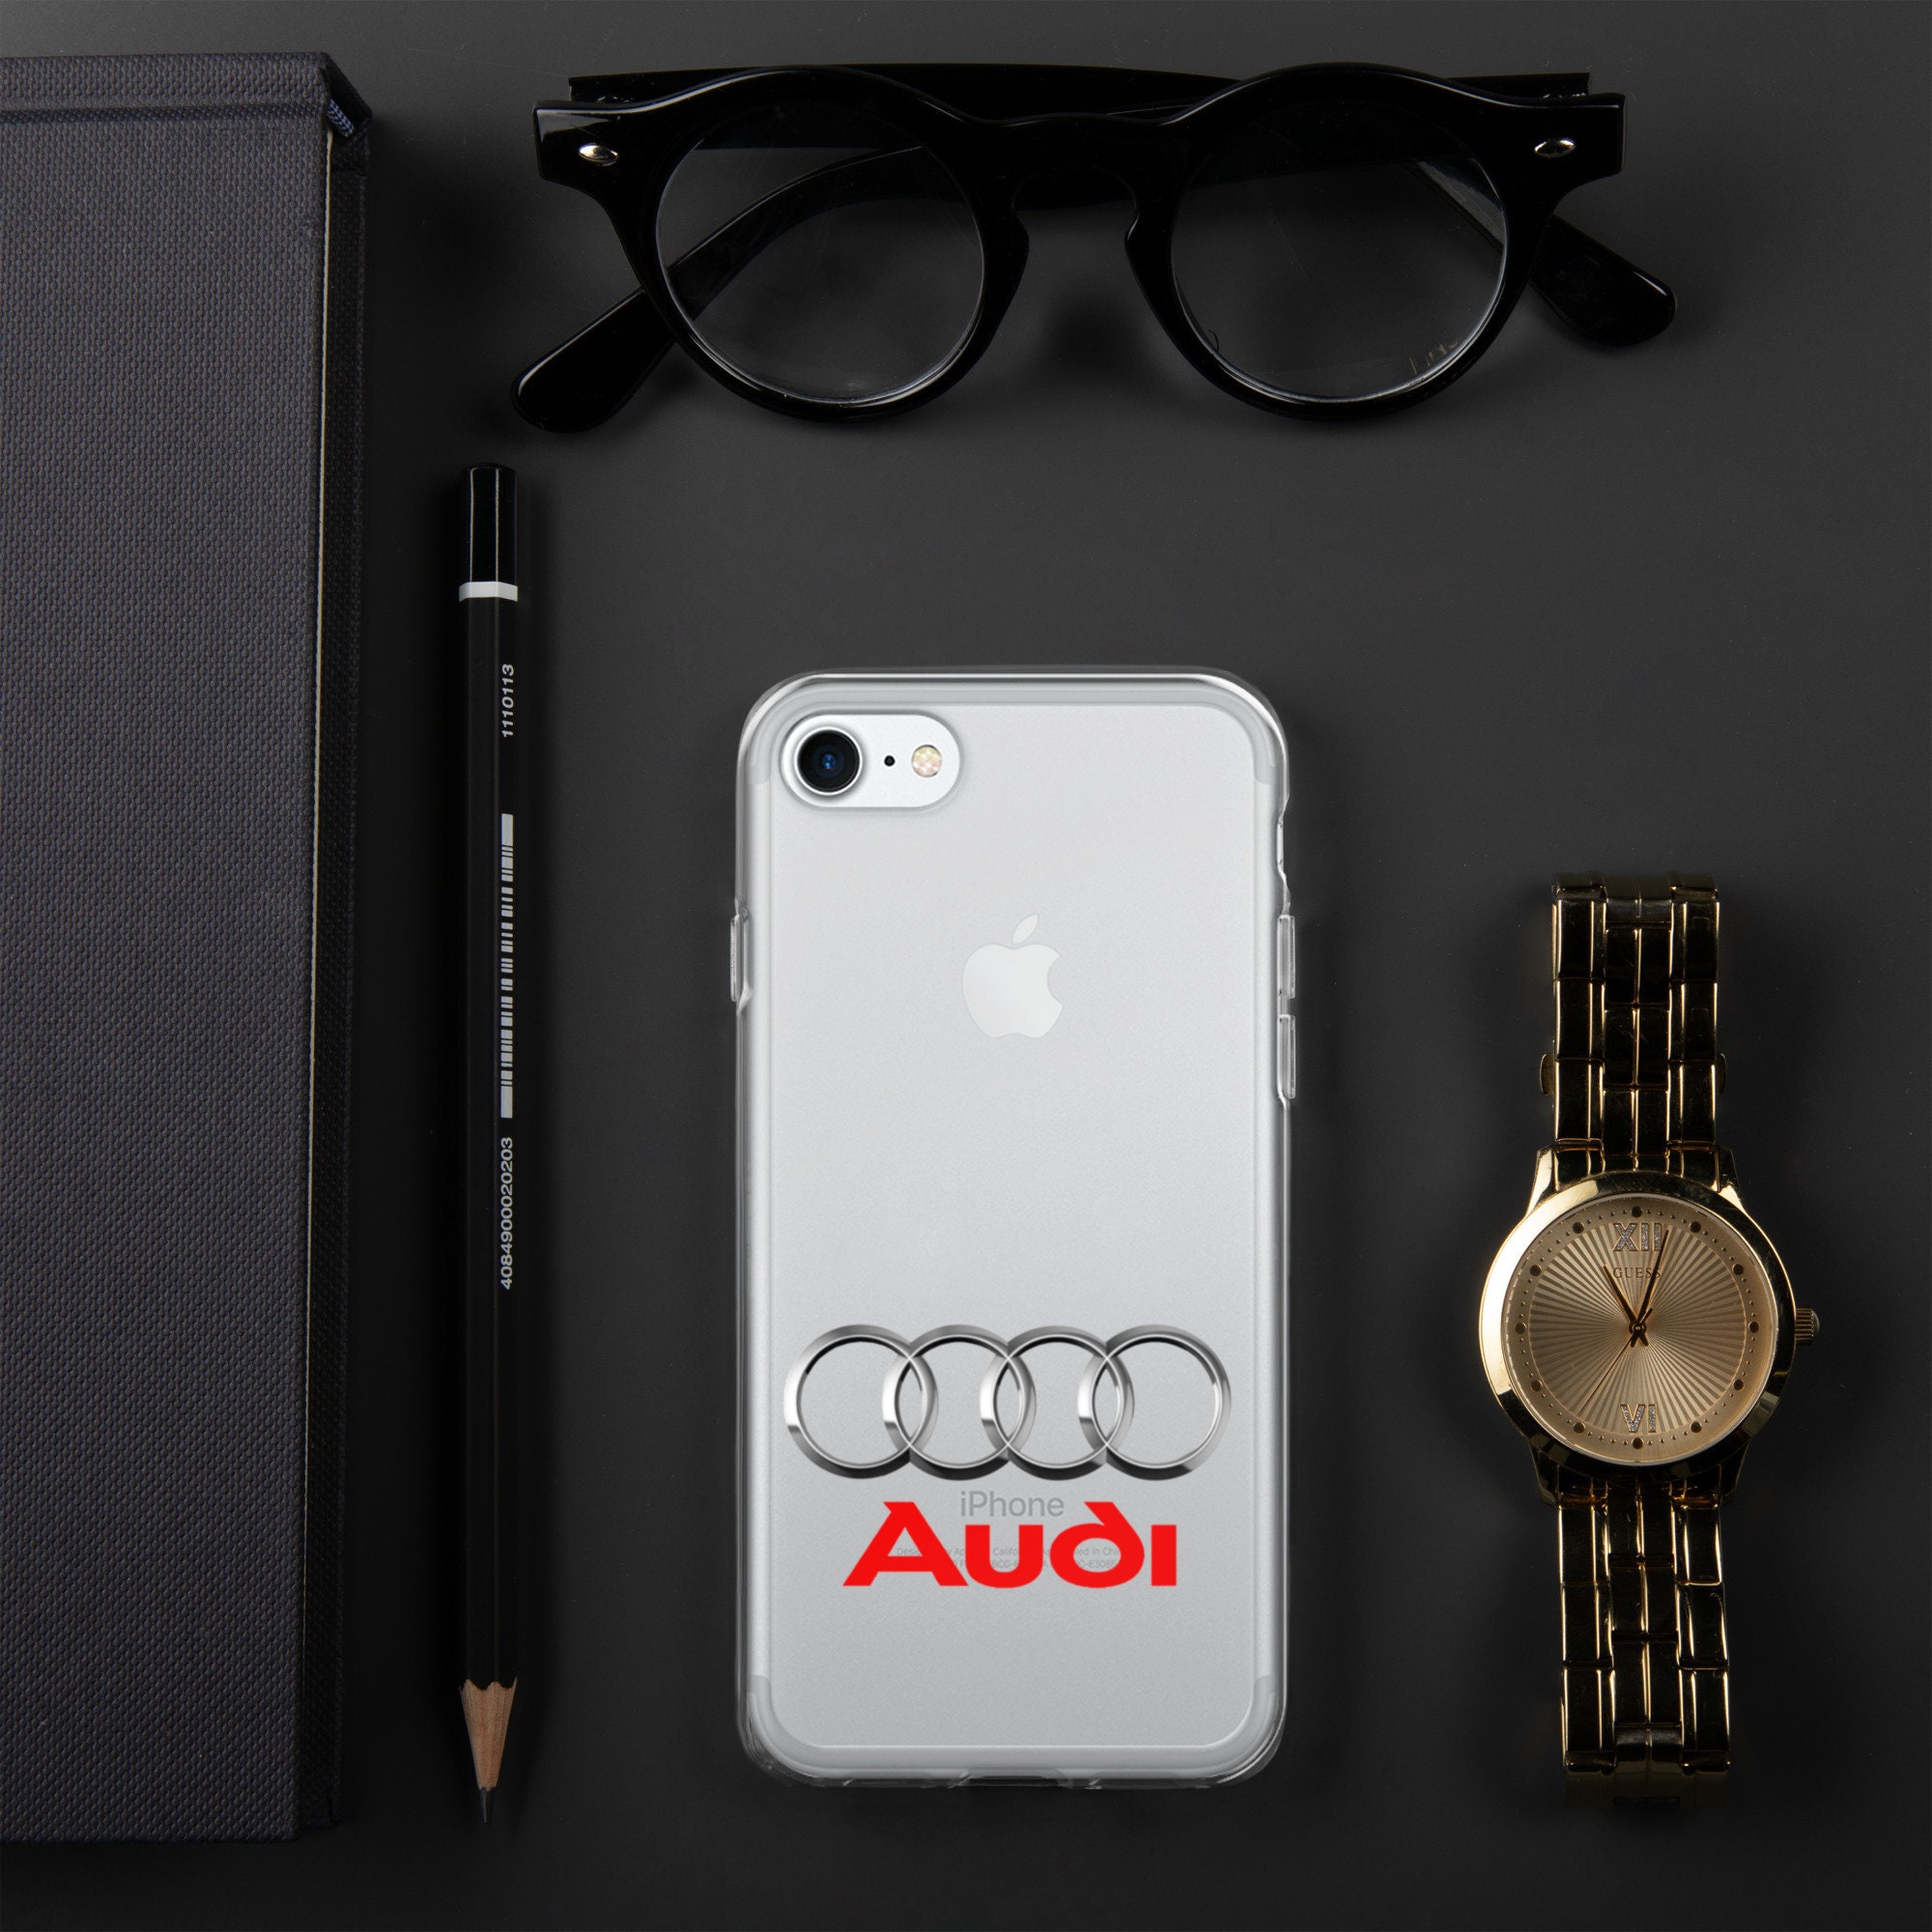 Audi Smartphone Etui Nardia 3151600800 Grau Handy Tasche Hülle iPhone